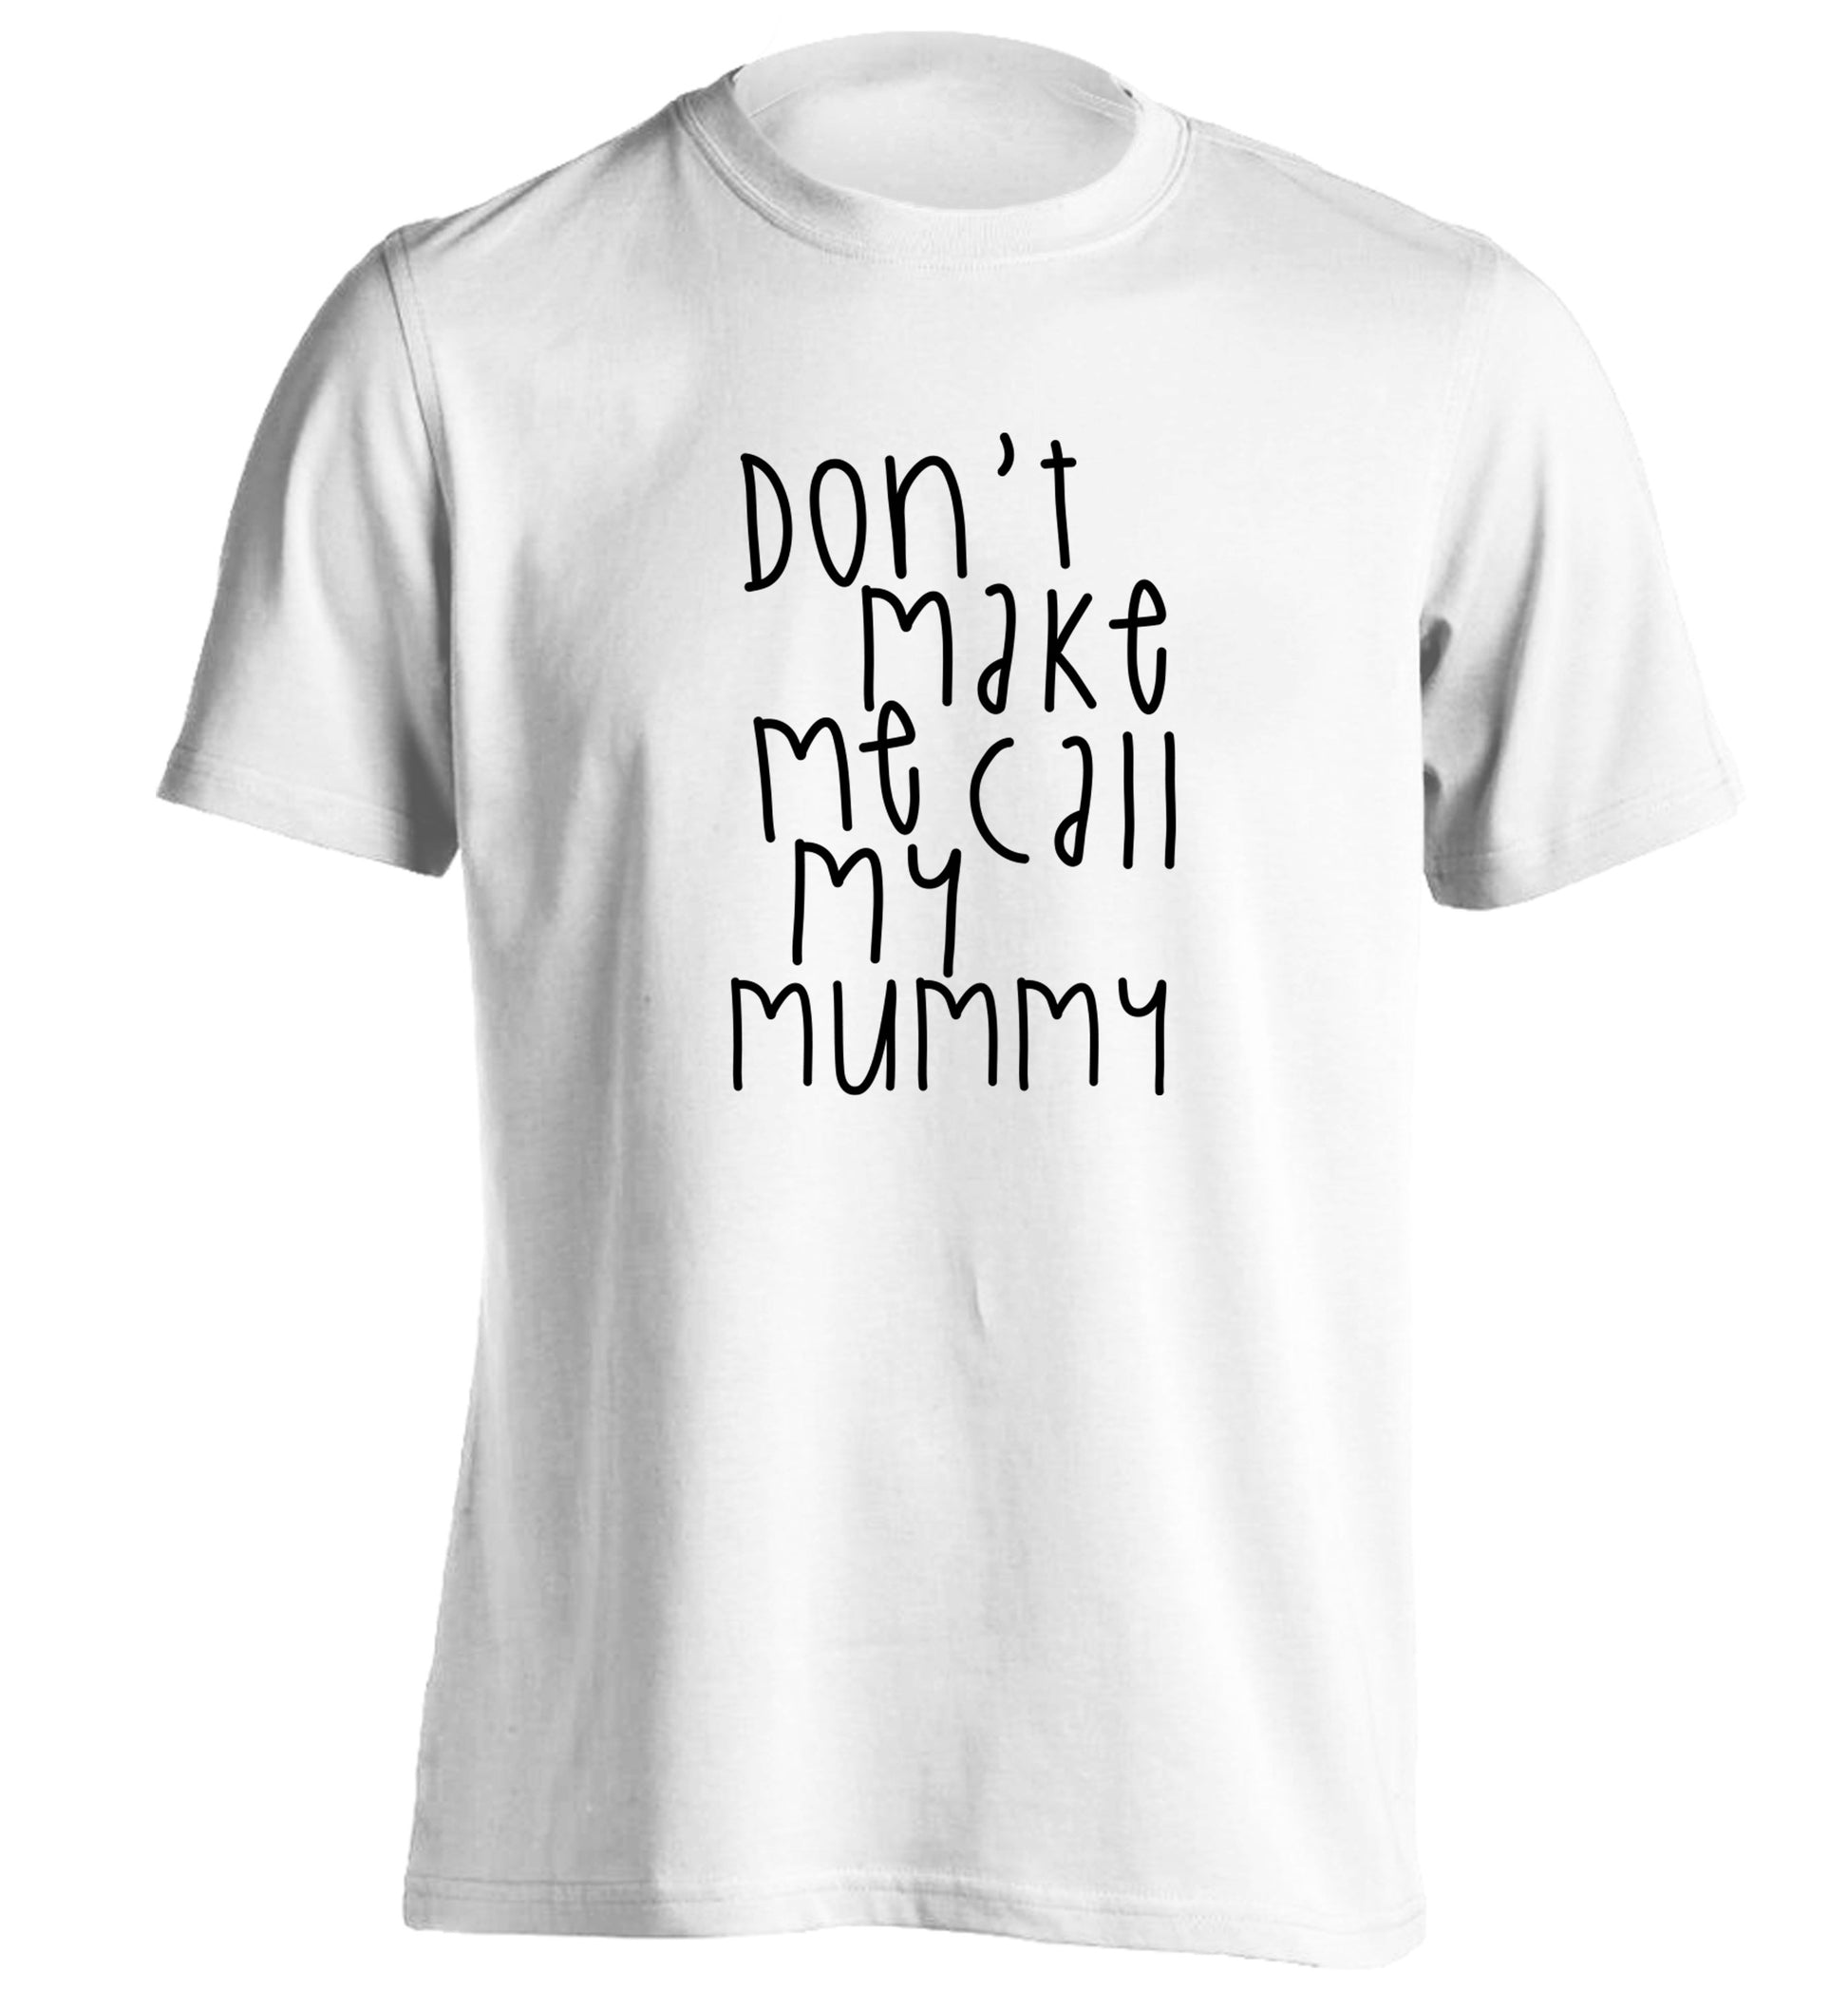 Don't make me call my mummy adults unisex white Tshirt 2XL